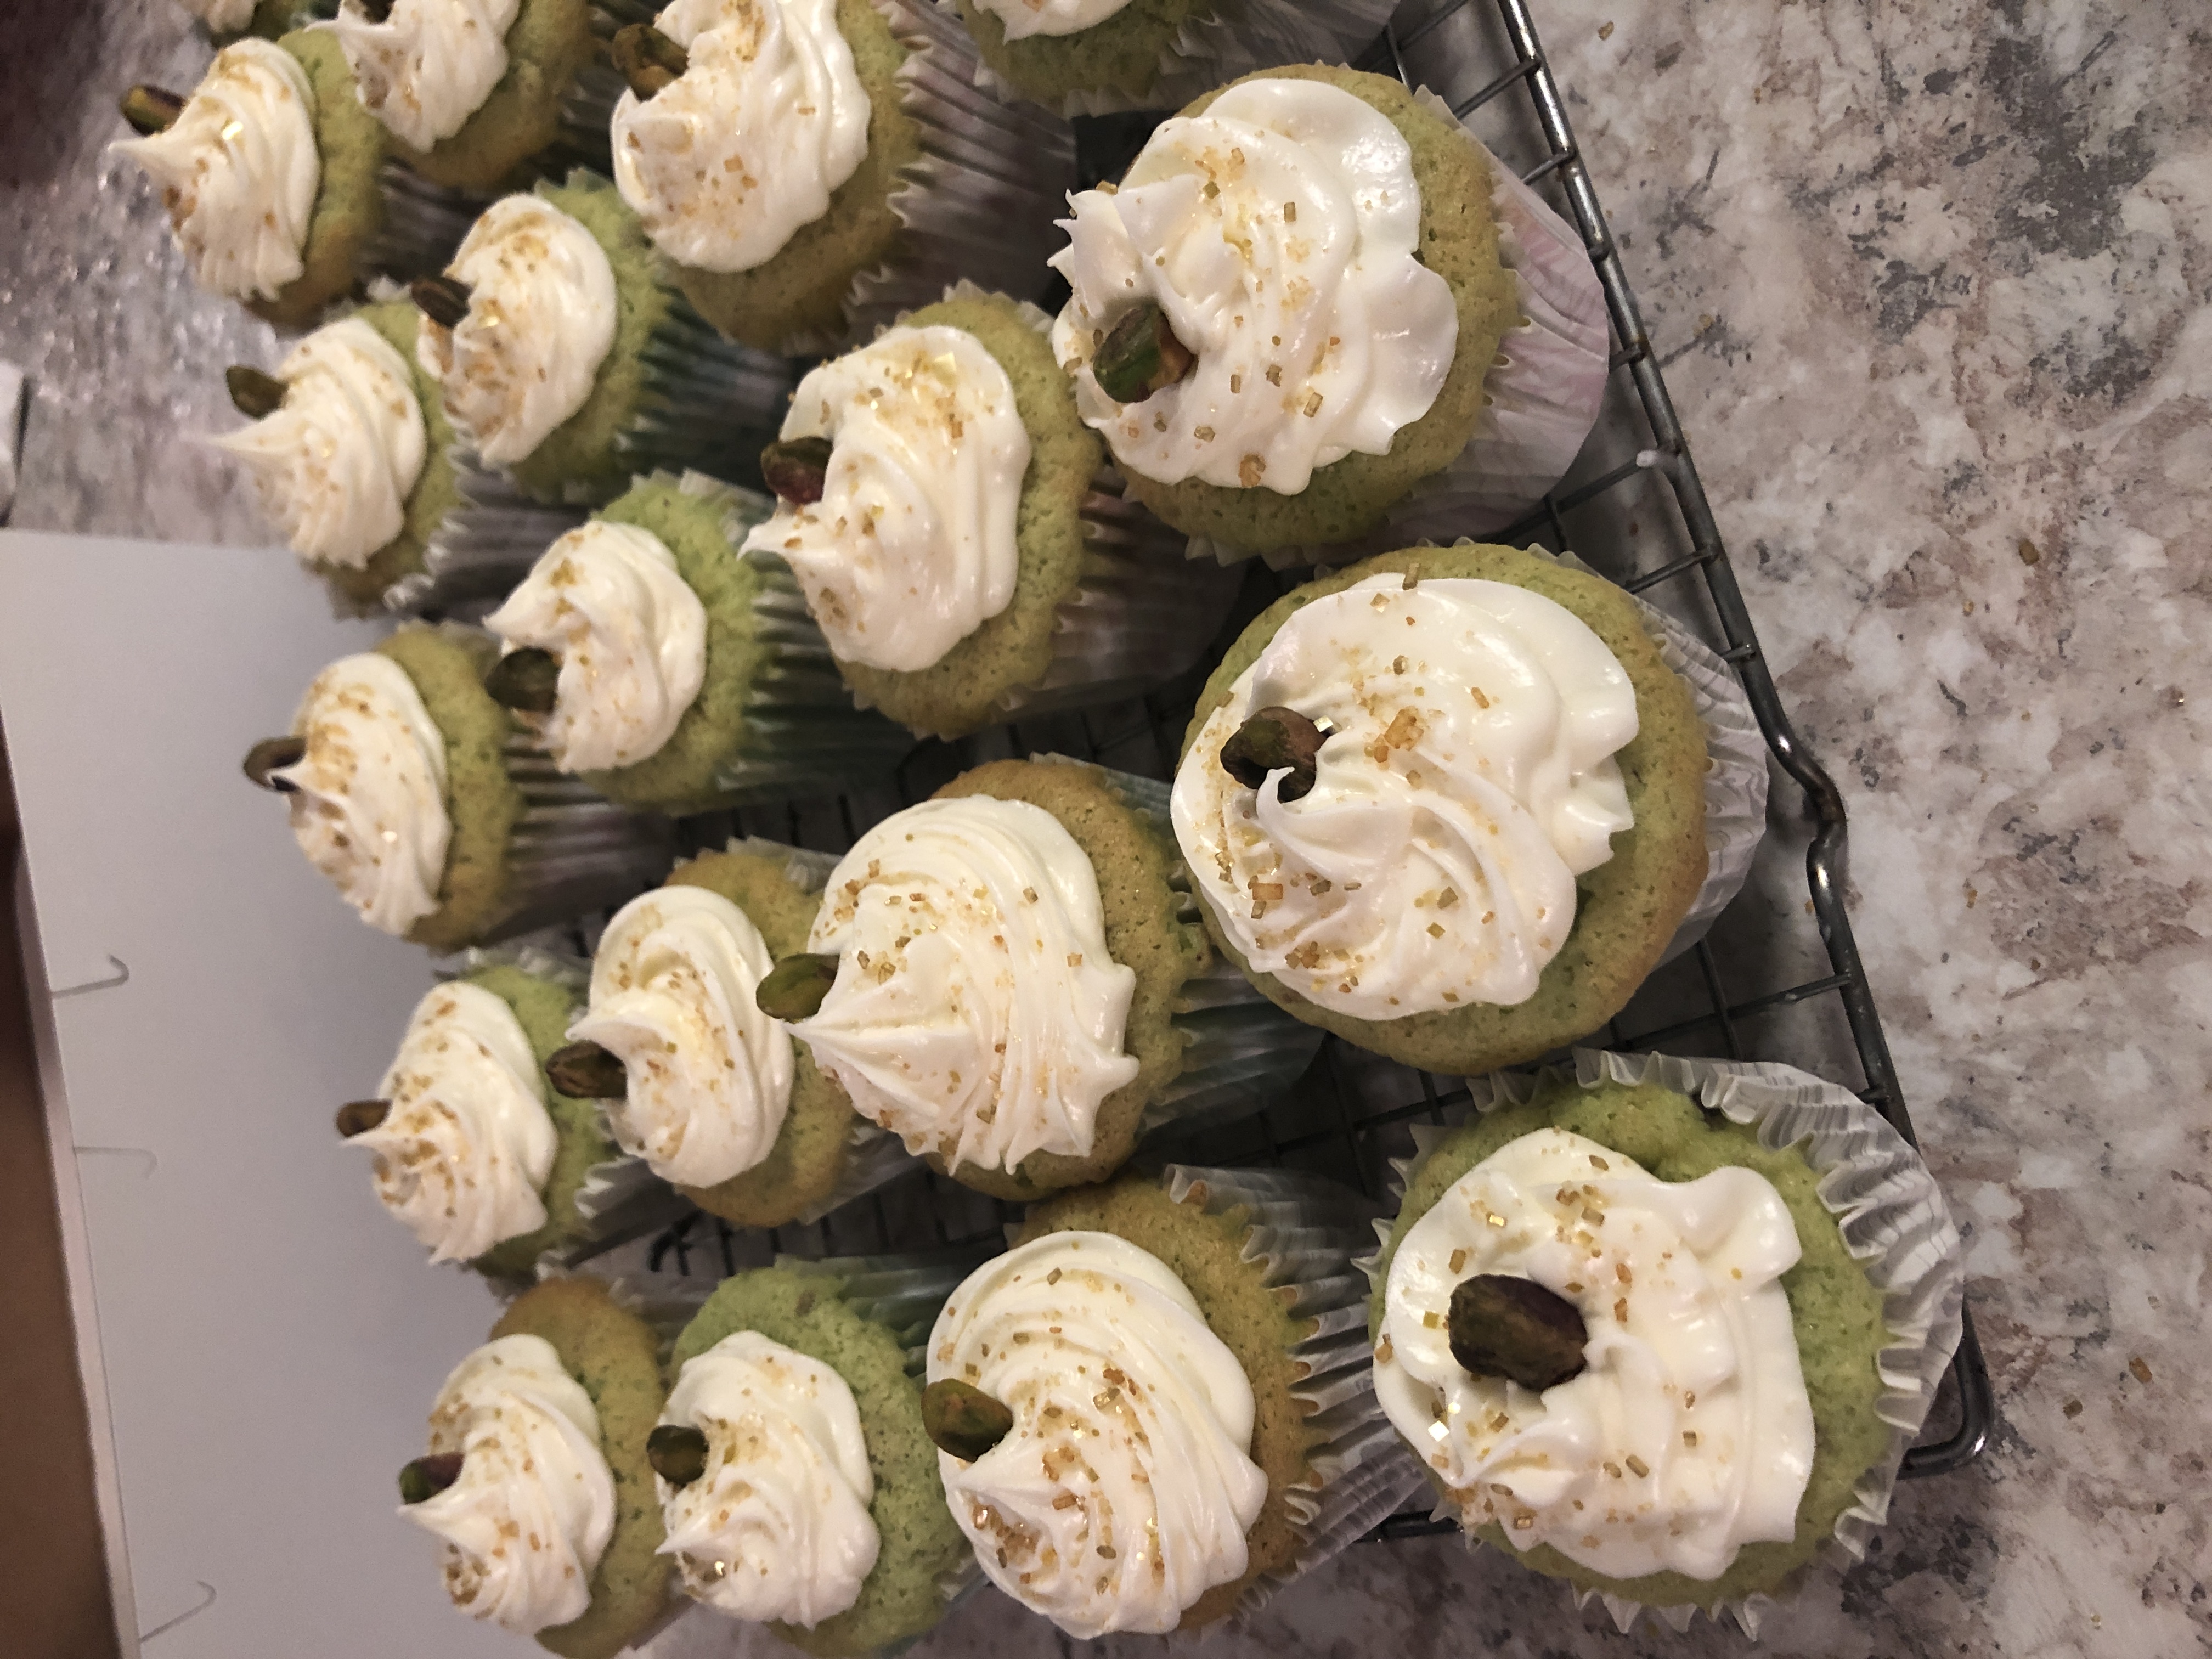 amaretto pistachio cupcakes with cream cheese white chocolate frosting